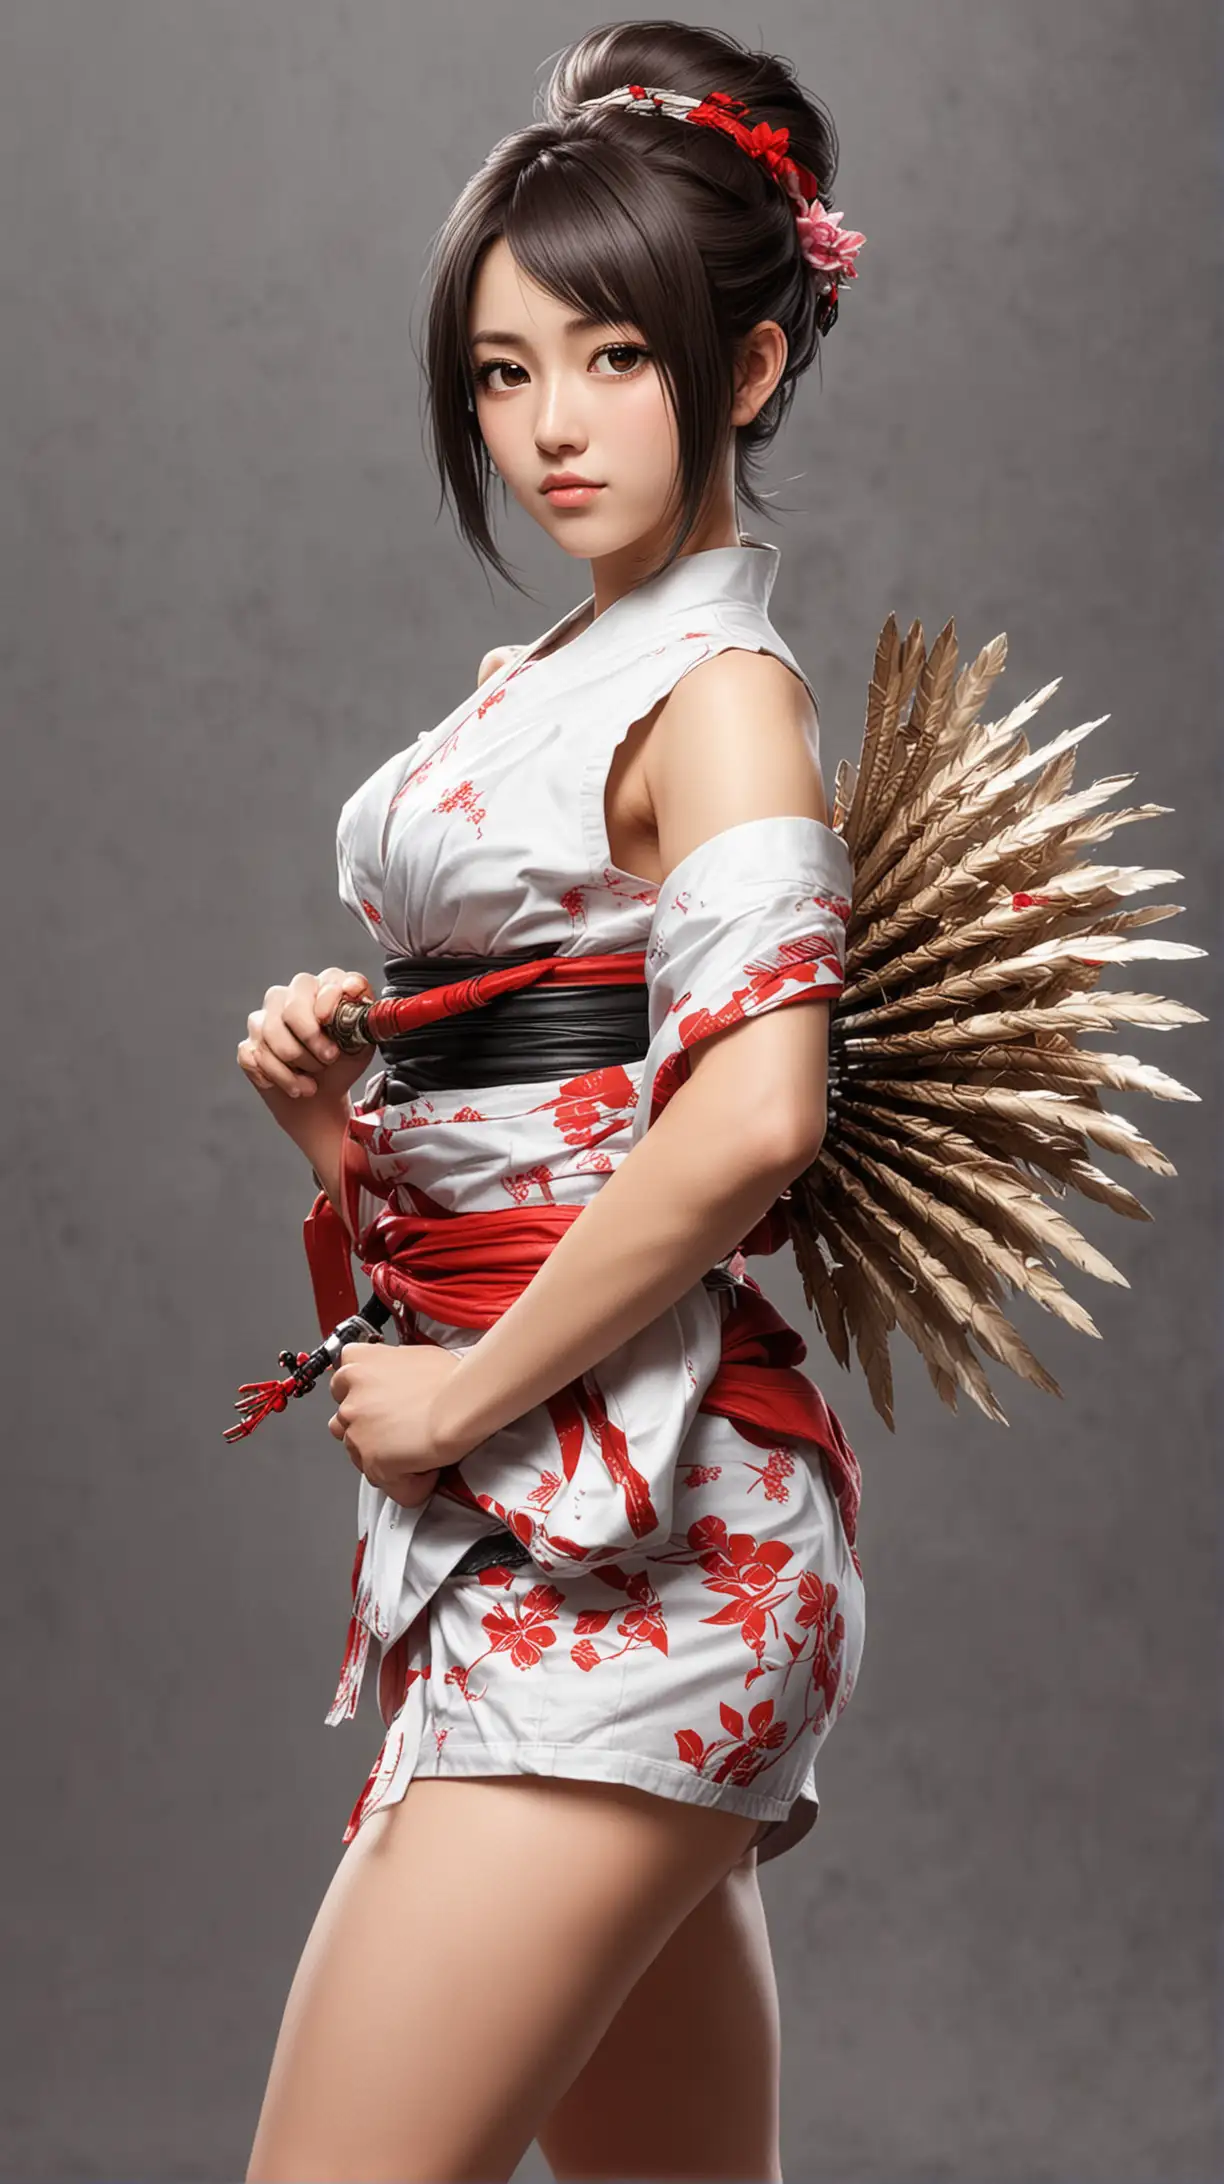 Mai Shiranui the Japanese Ninja Elegant Fighter with a Fan